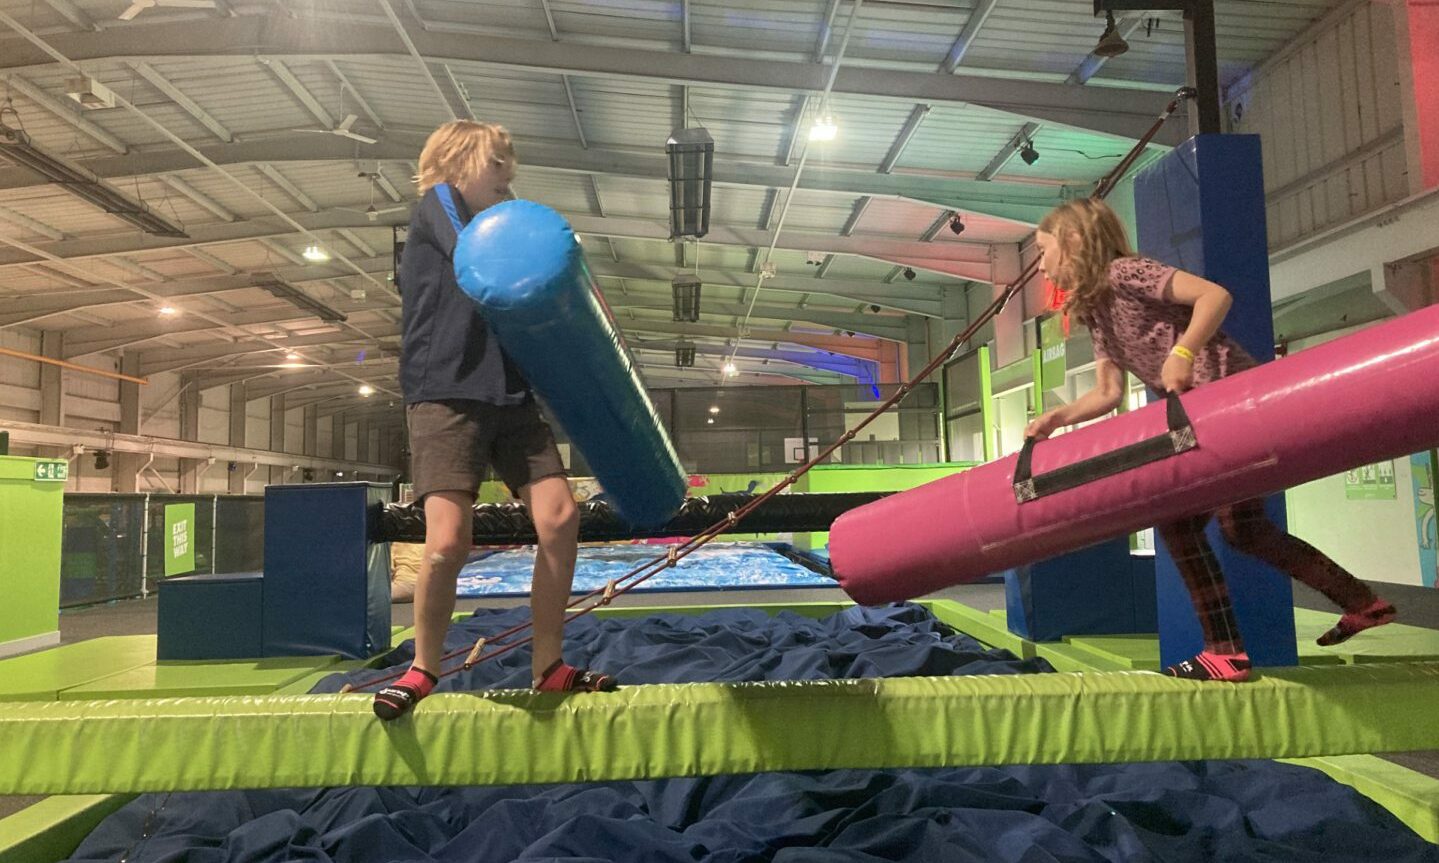 Jump In Adventure Park Aberdeen  Ultimate Bouncing Fun For Kids